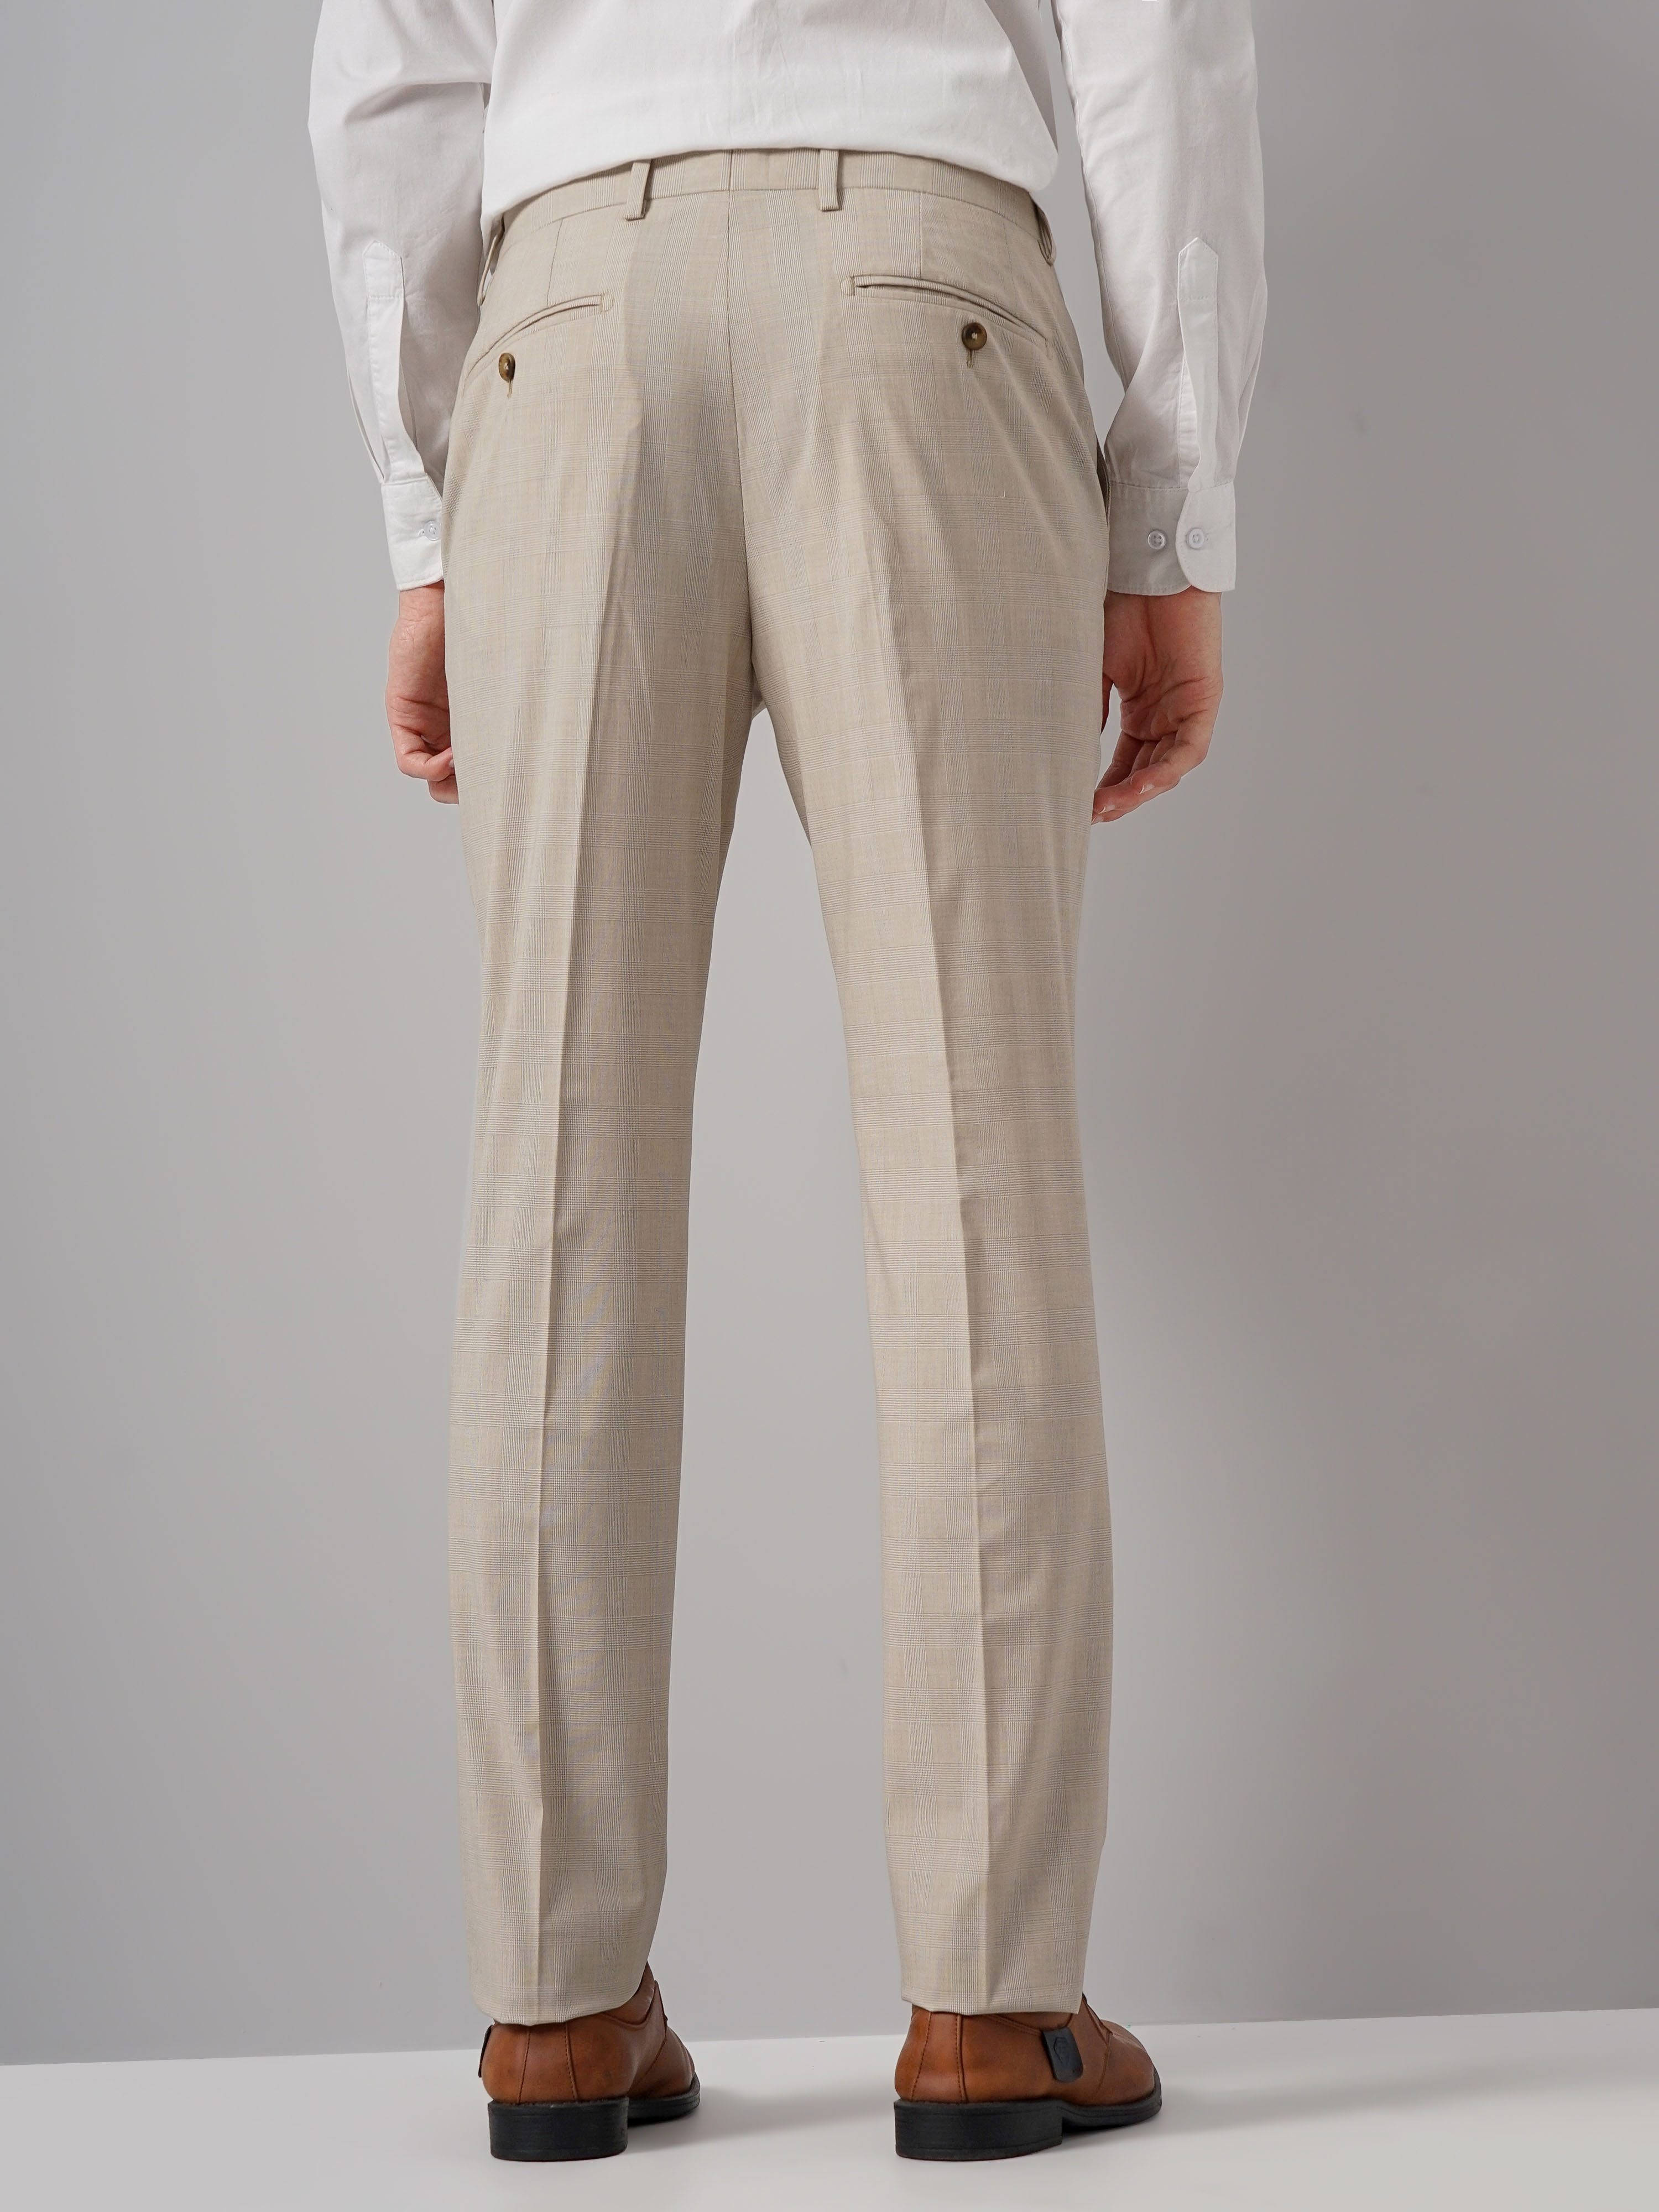 Aadiyogi Formal pants Pack of Two Combo Pants For Men | Men's Dress Pants |  Slim Fit | Office Trousers